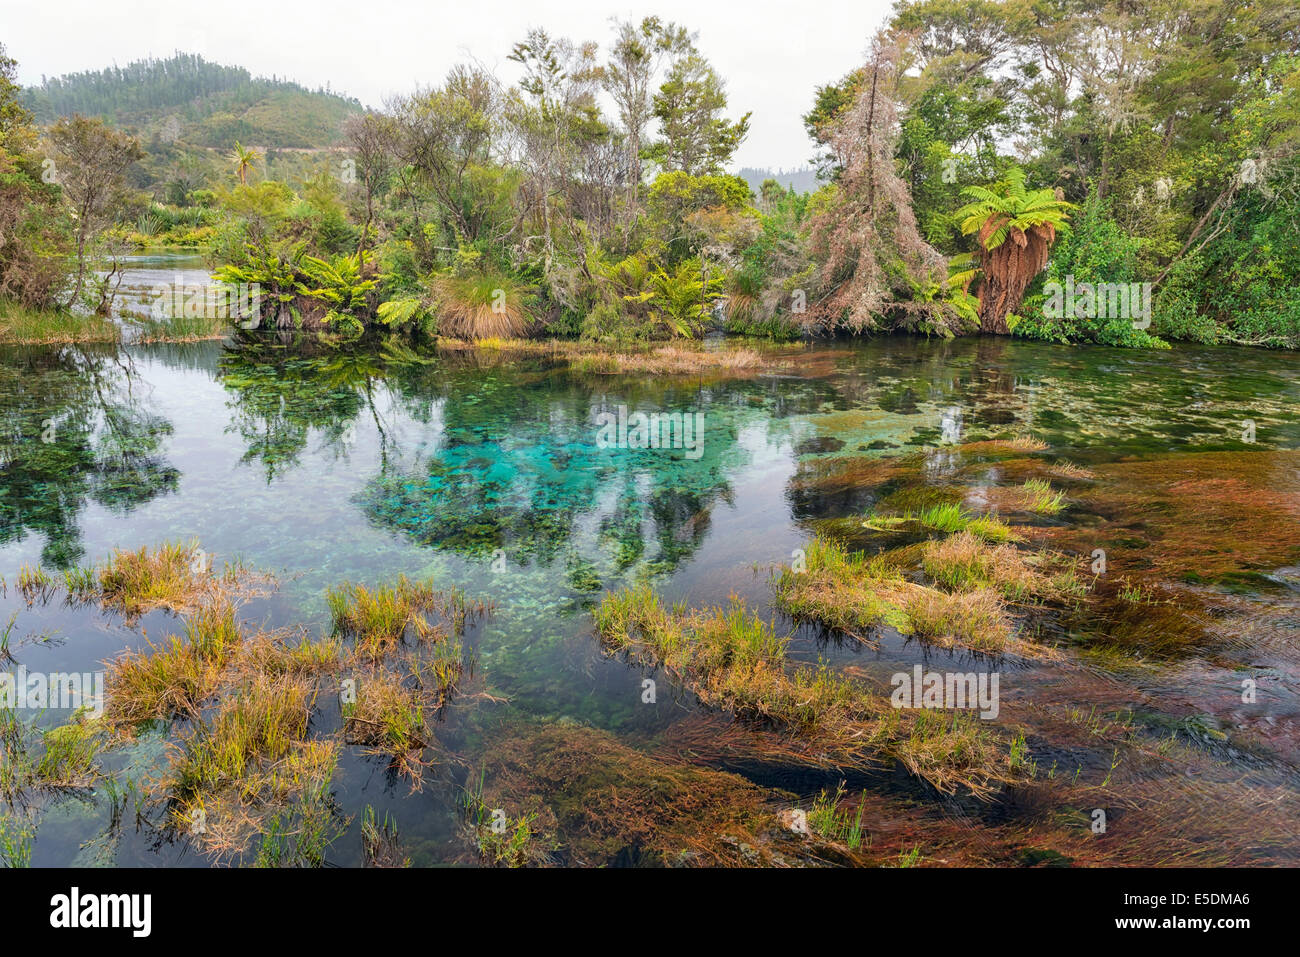 New Zealand, Tasman, Takaka, Te Waikoropupu Springs with vegetation around the freshwater pool Stock Photo